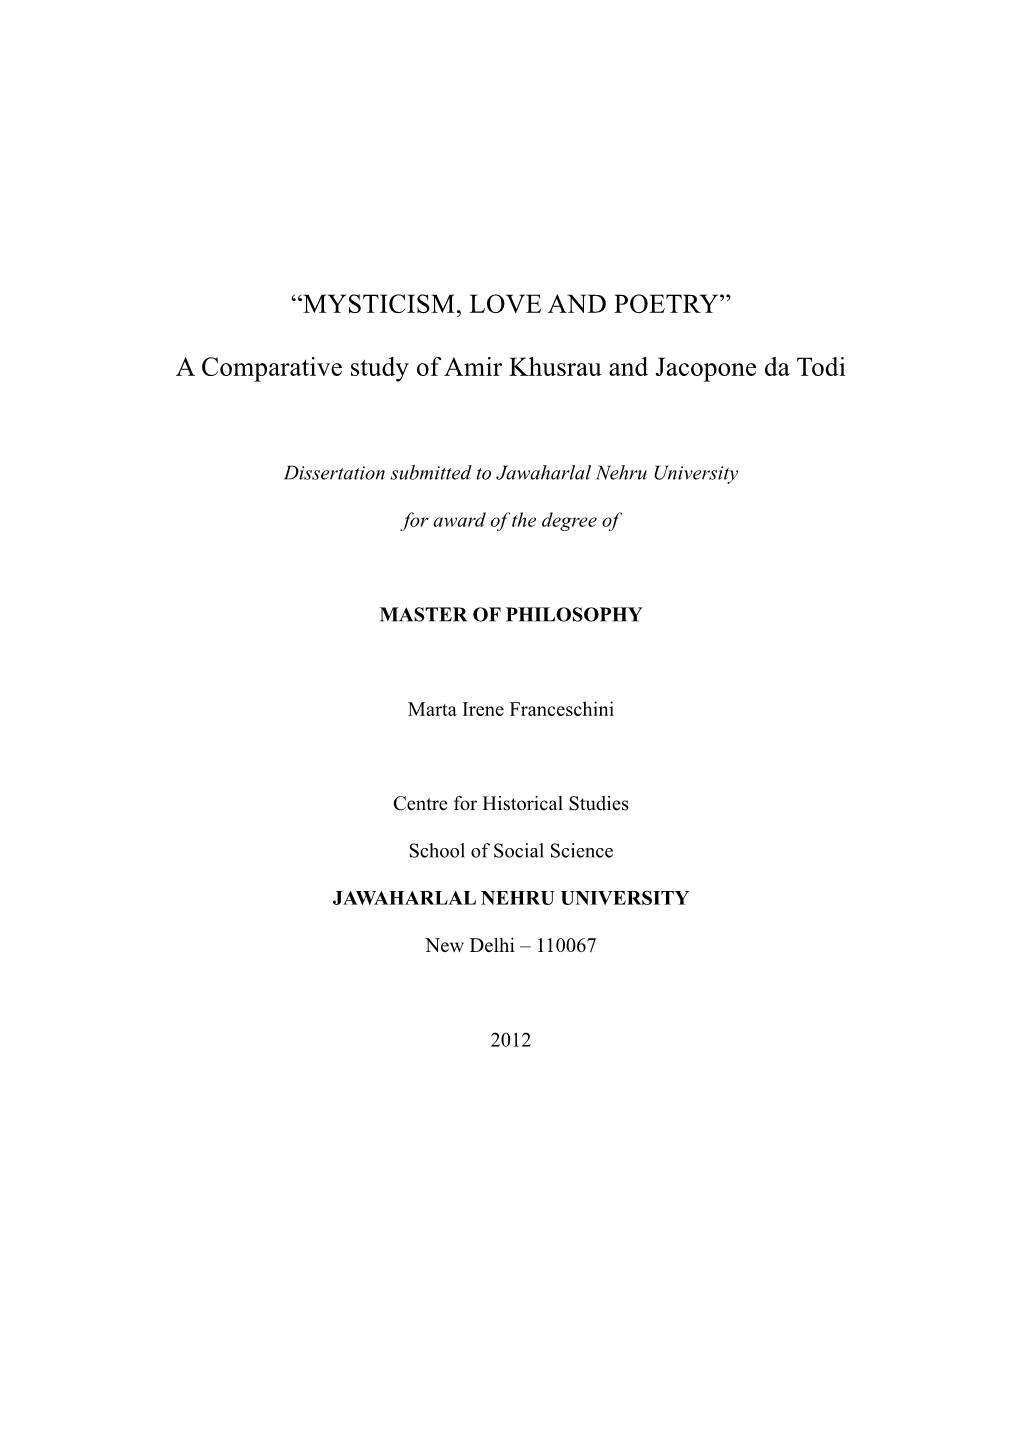 A Comparative Study of Amir Khusrau and Jacopone Da Todi